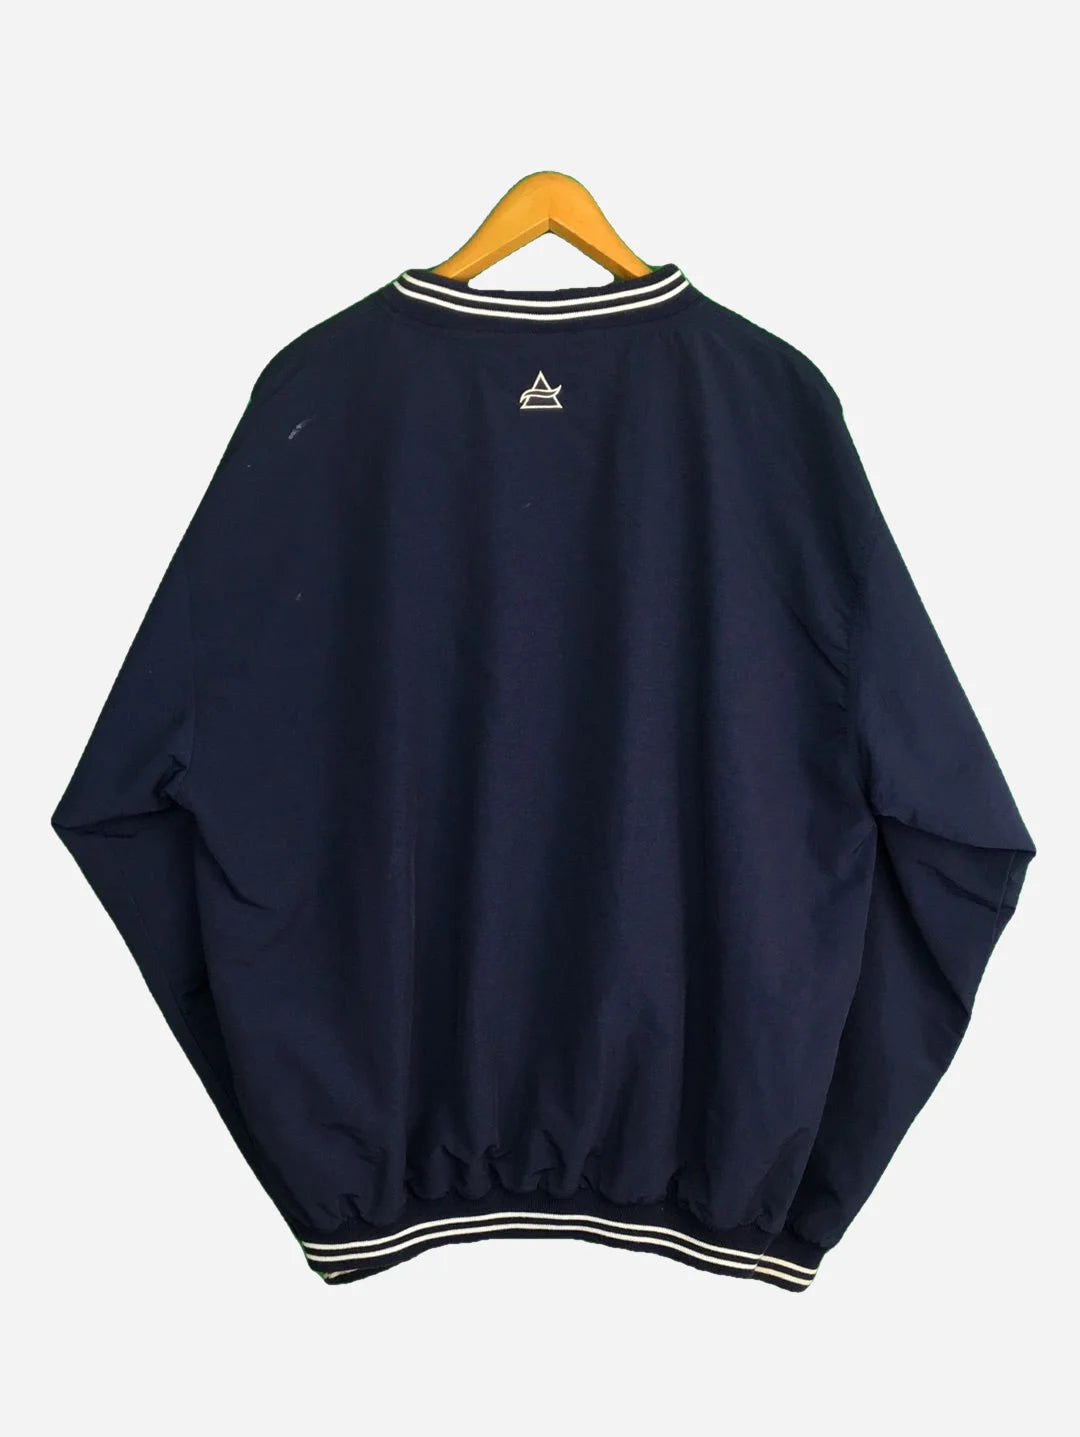 Azzurri Windbreaker Sweater (XL)